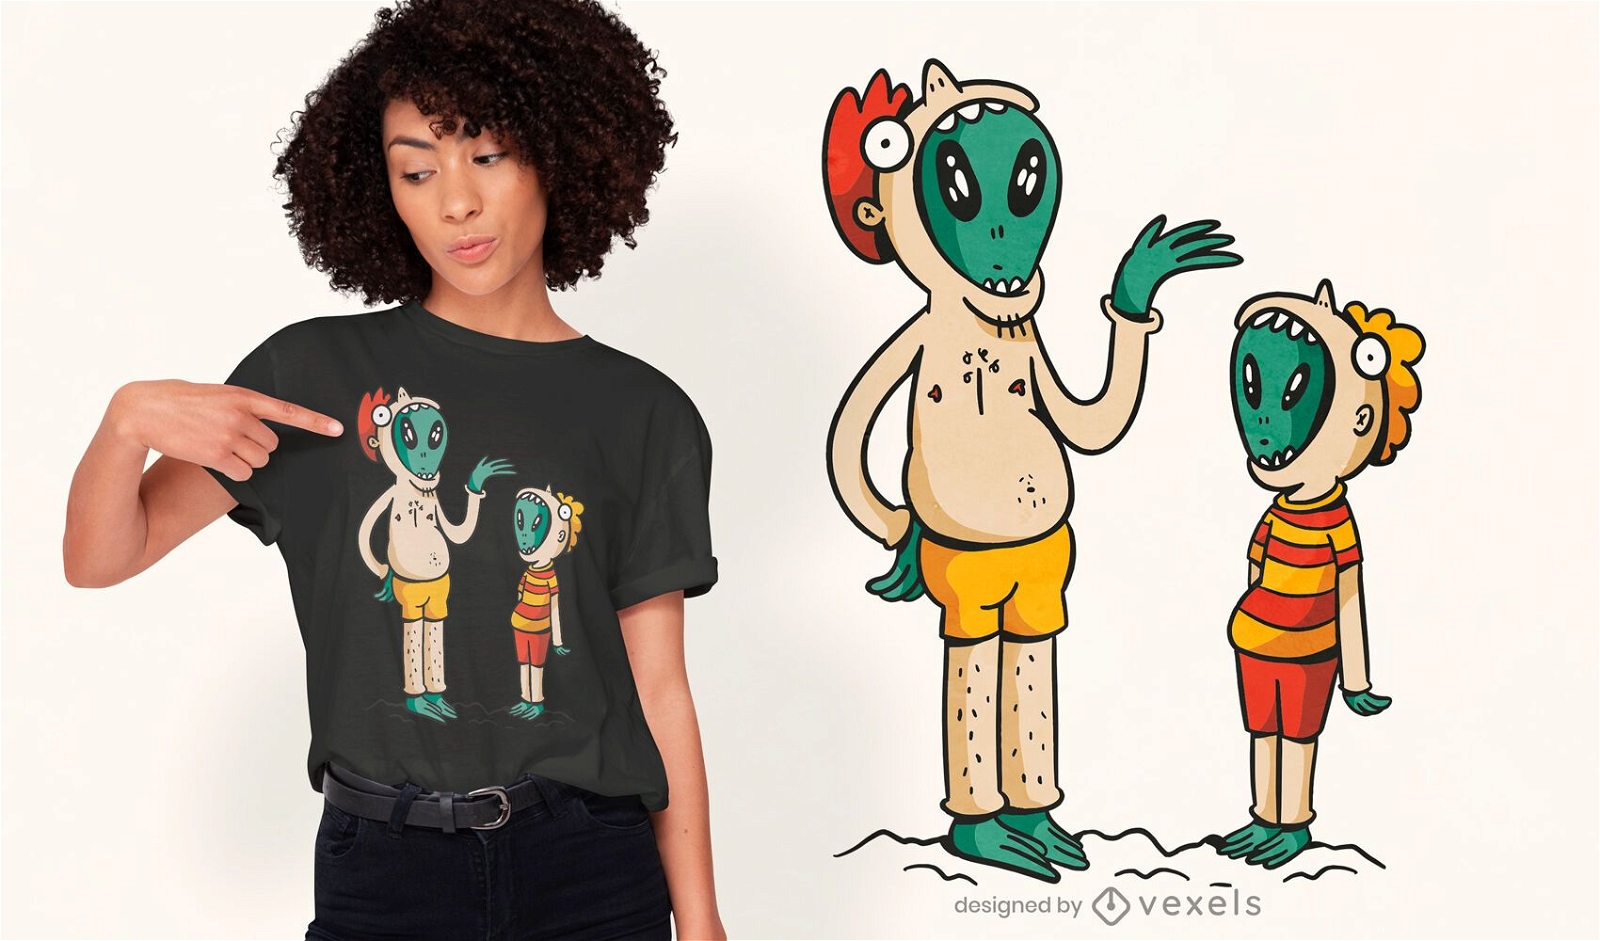 Dise?o de camiseta de traje humano de familia alien?gena.